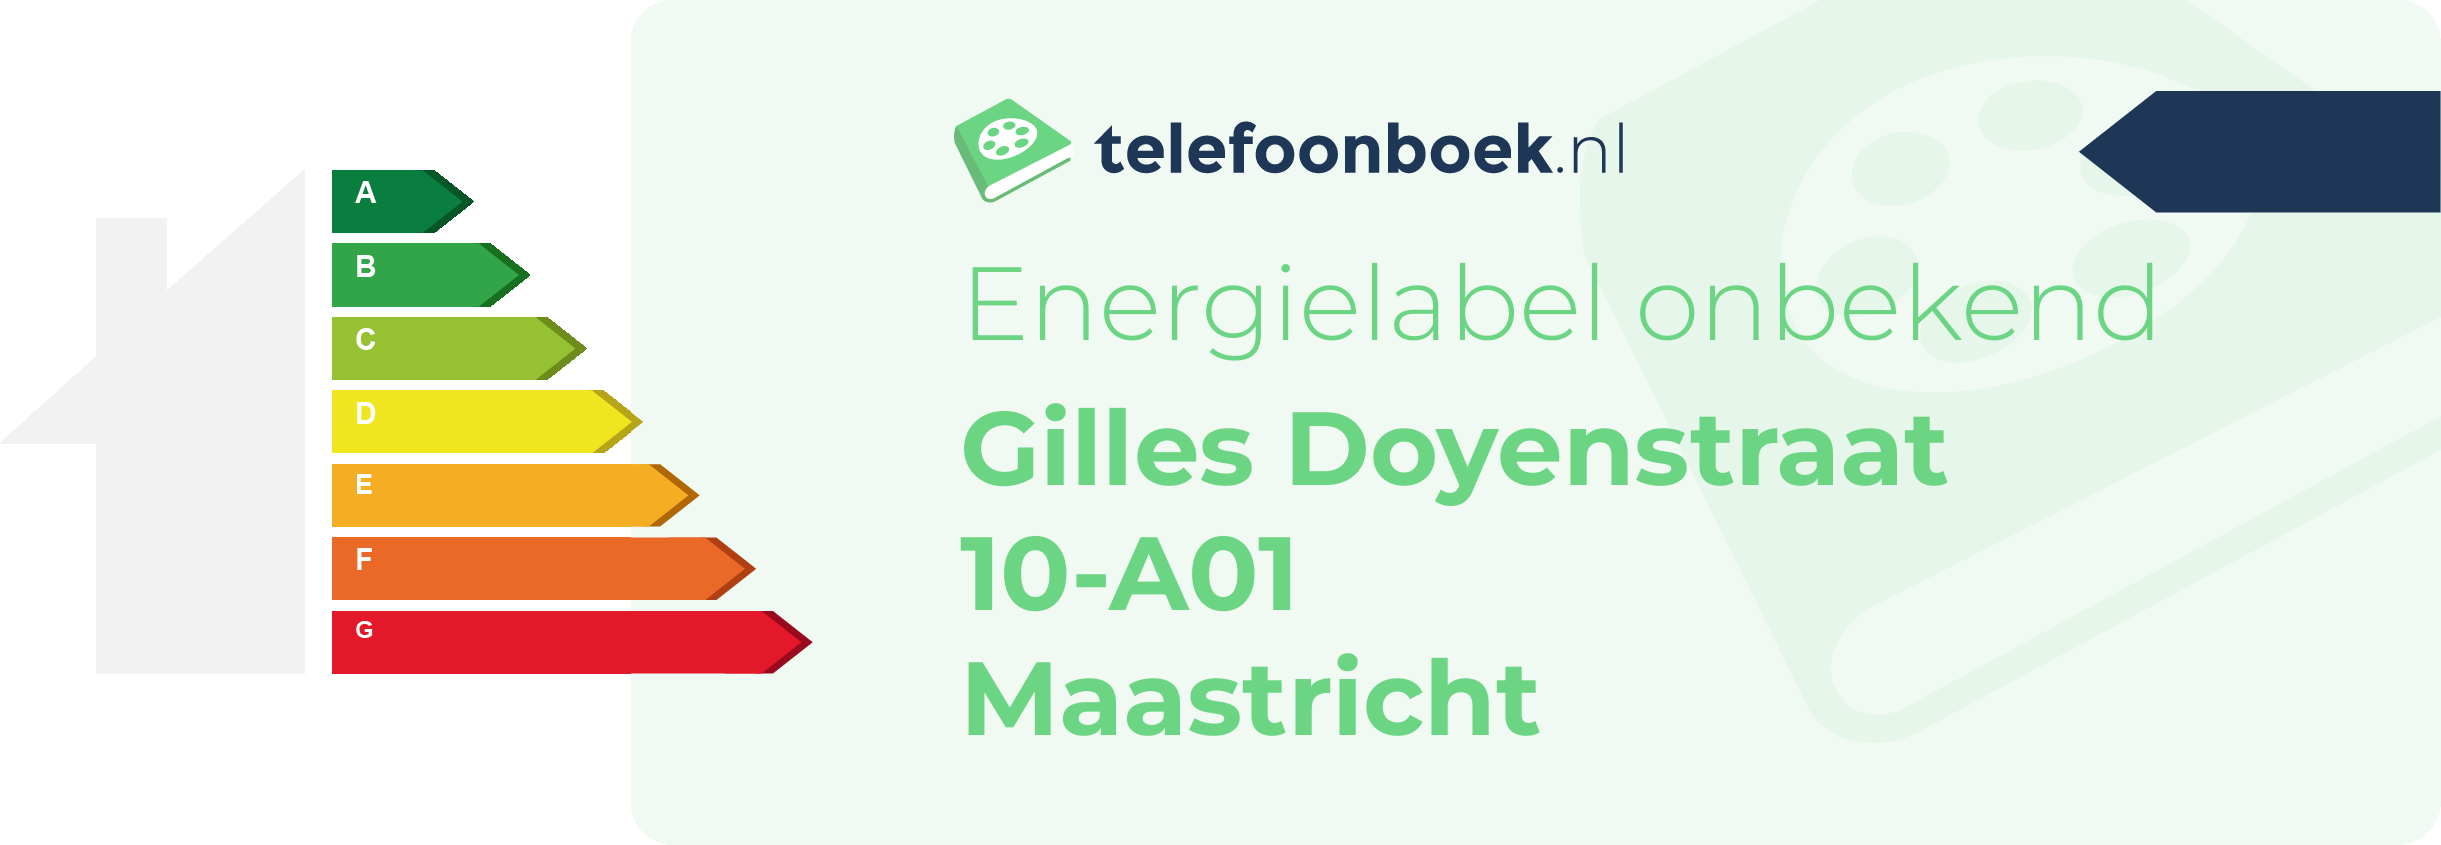 Energielabel Gilles Doyenstraat 10-A01 Maastricht